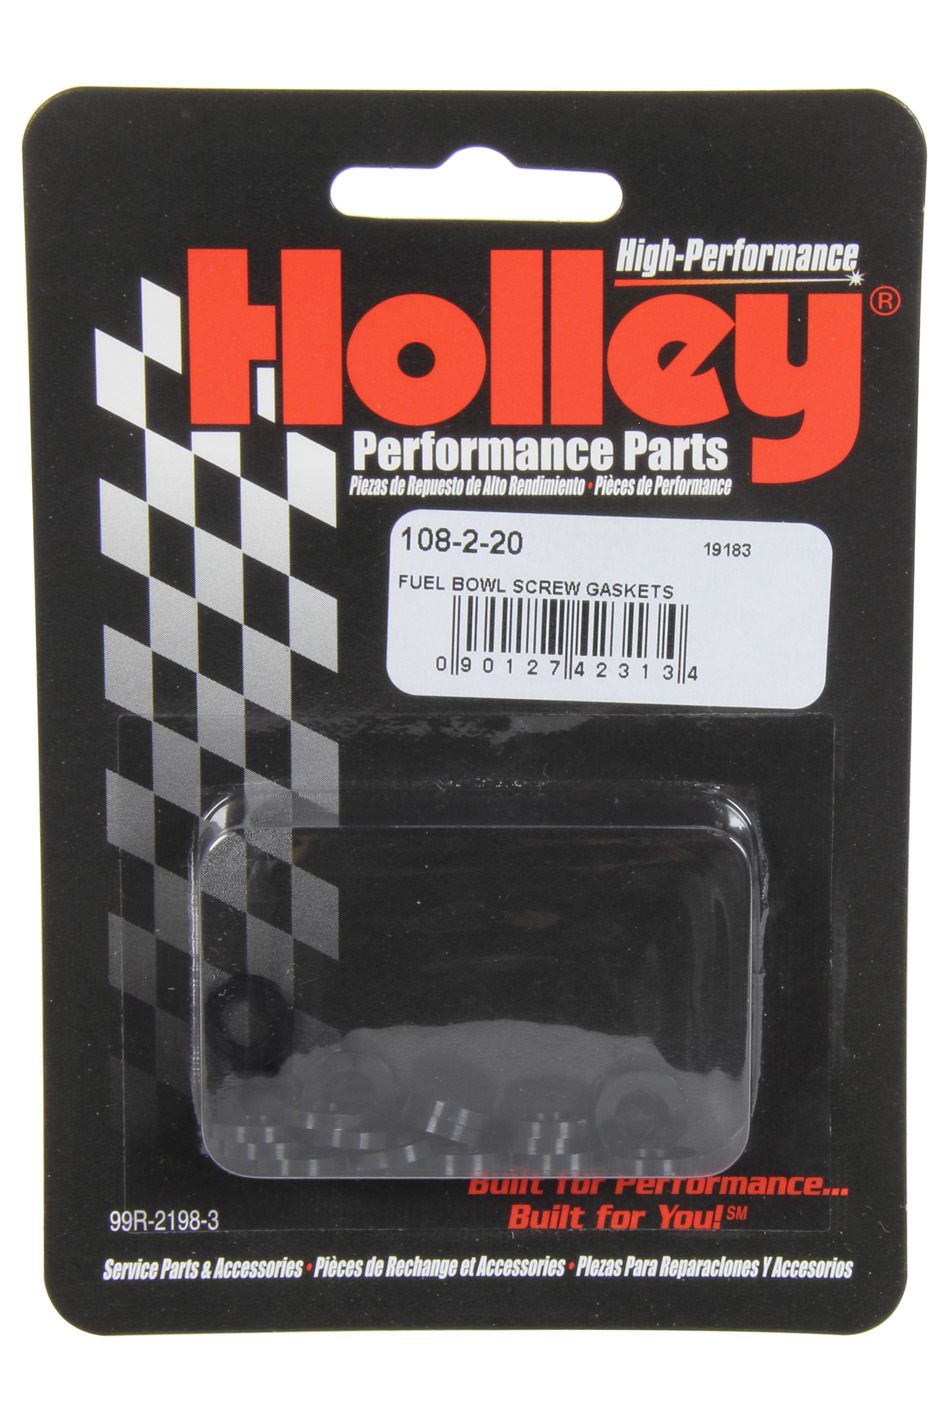 Holley 108-2-20 - Fuel Bowl Screw Gasket, Nylon, Holley Carburetors, Set of 20